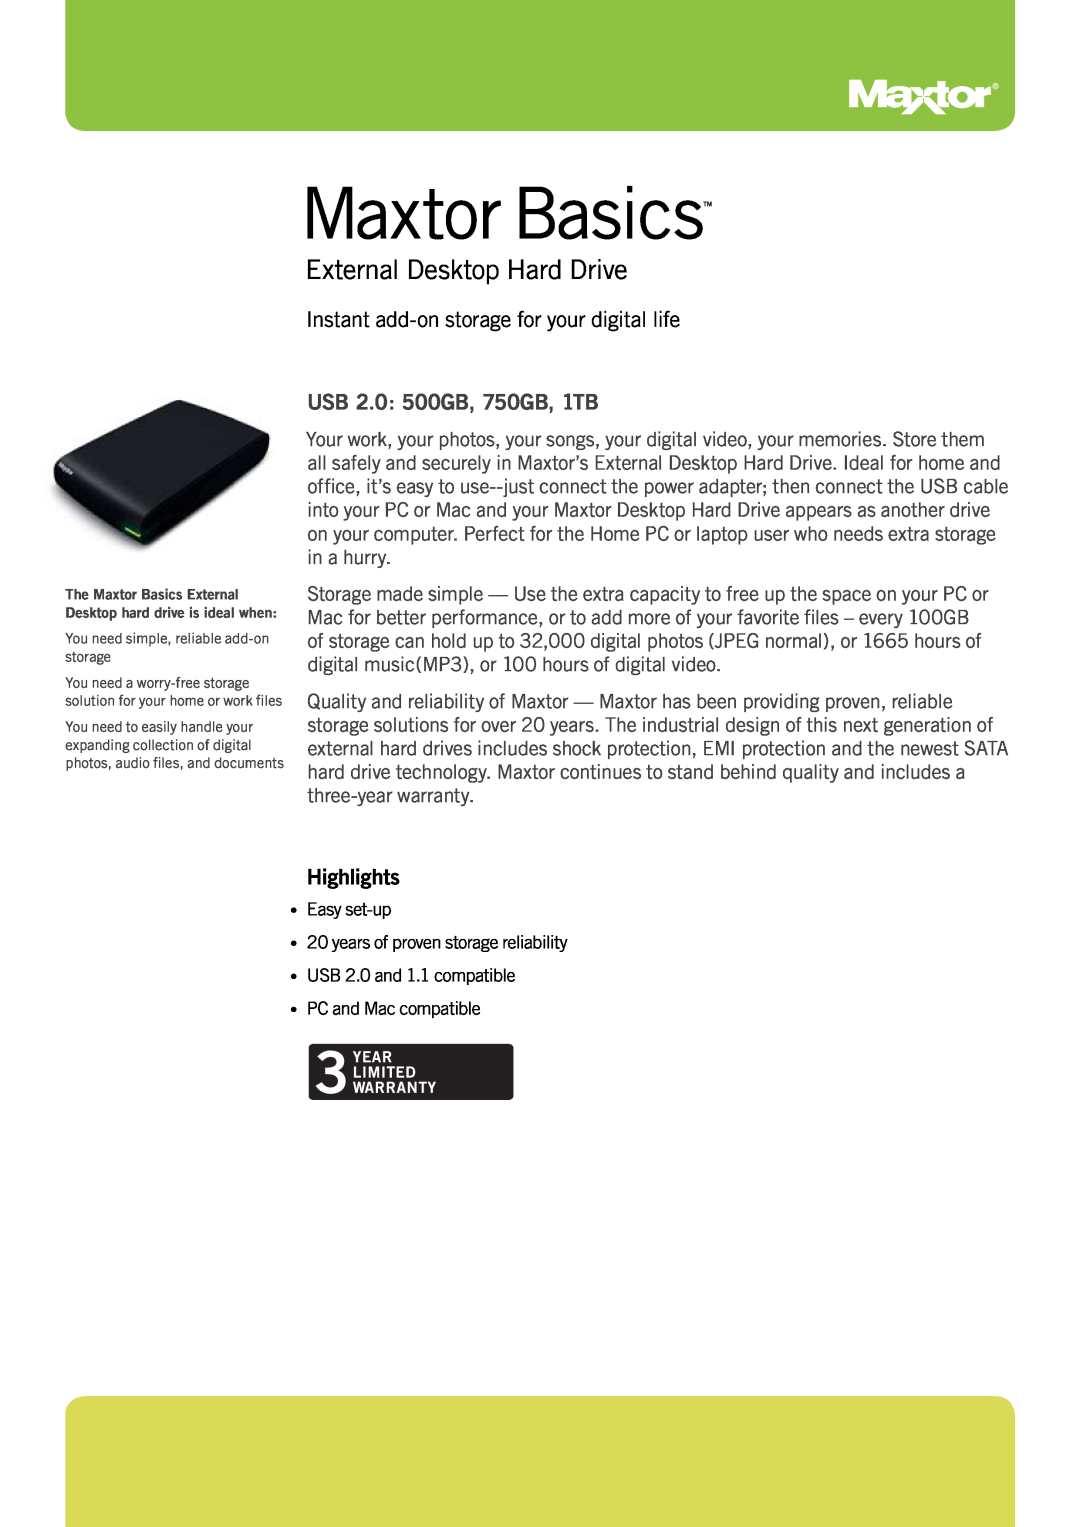 Maxtor STM305003EHD301-RK warranty Maxtor BasicsTM, External Desktop Hard Drive, USB 2.0 500GB, 750GB, 1TB, Highlights 